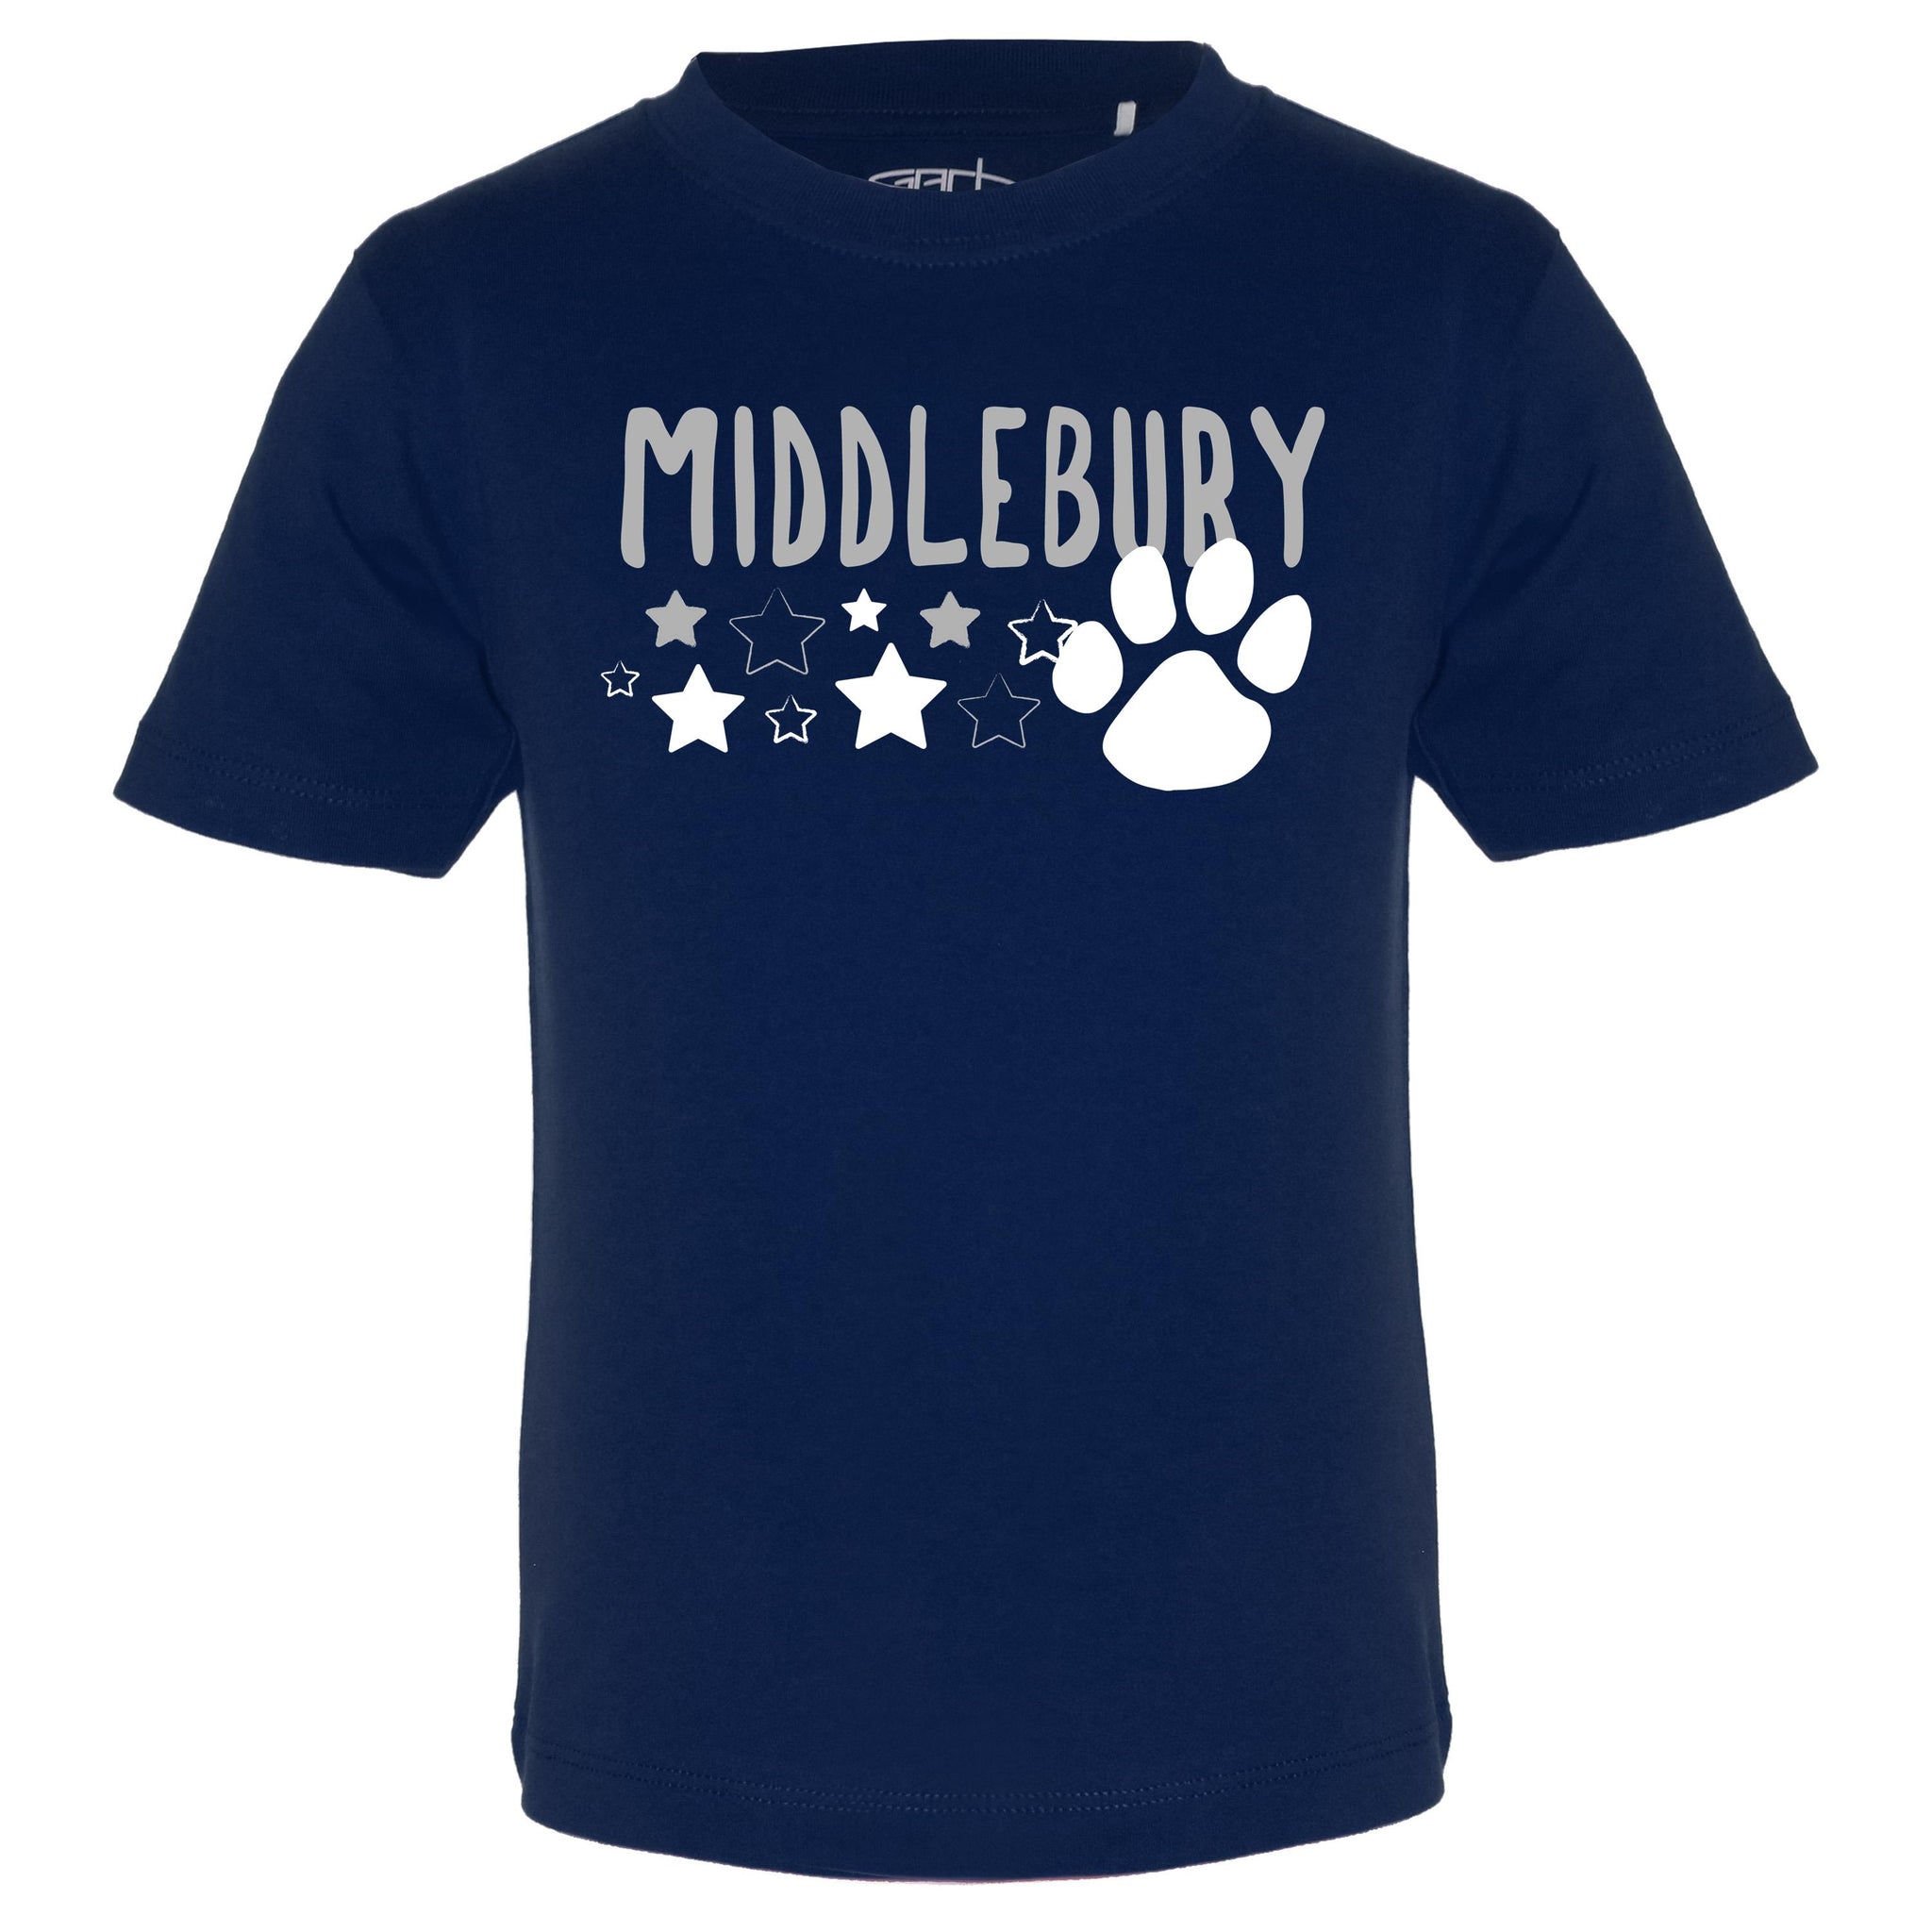 Middlebury "Star-Paw" Toddler T-Shirt